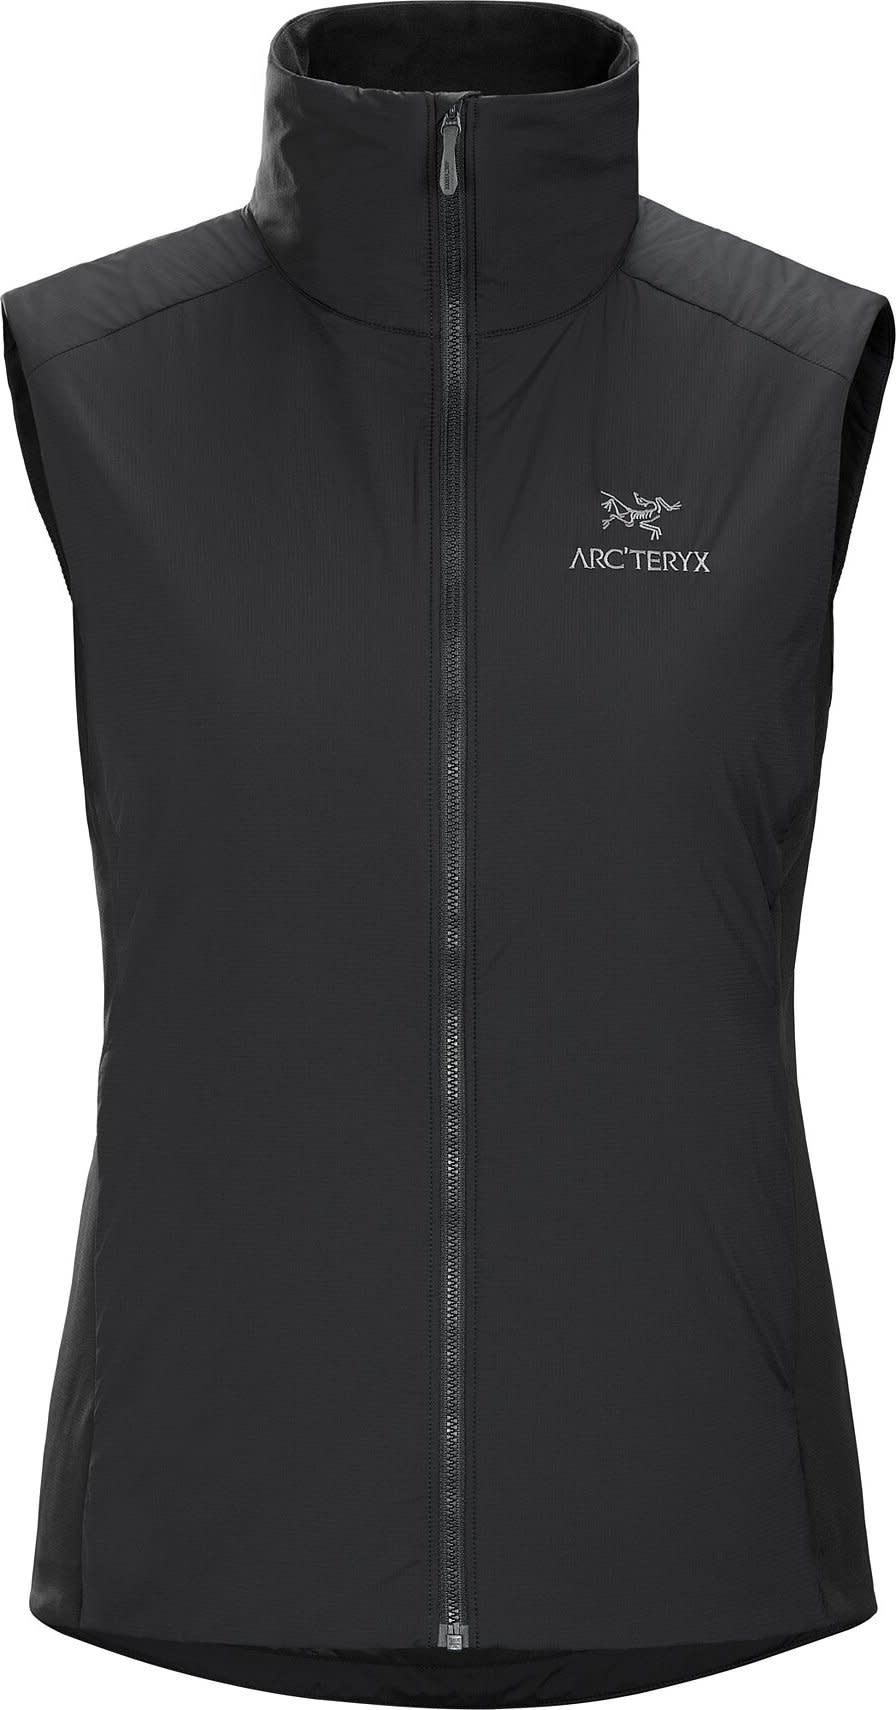 Arcteryx Arc’teryx Women’s Atom Vest Black